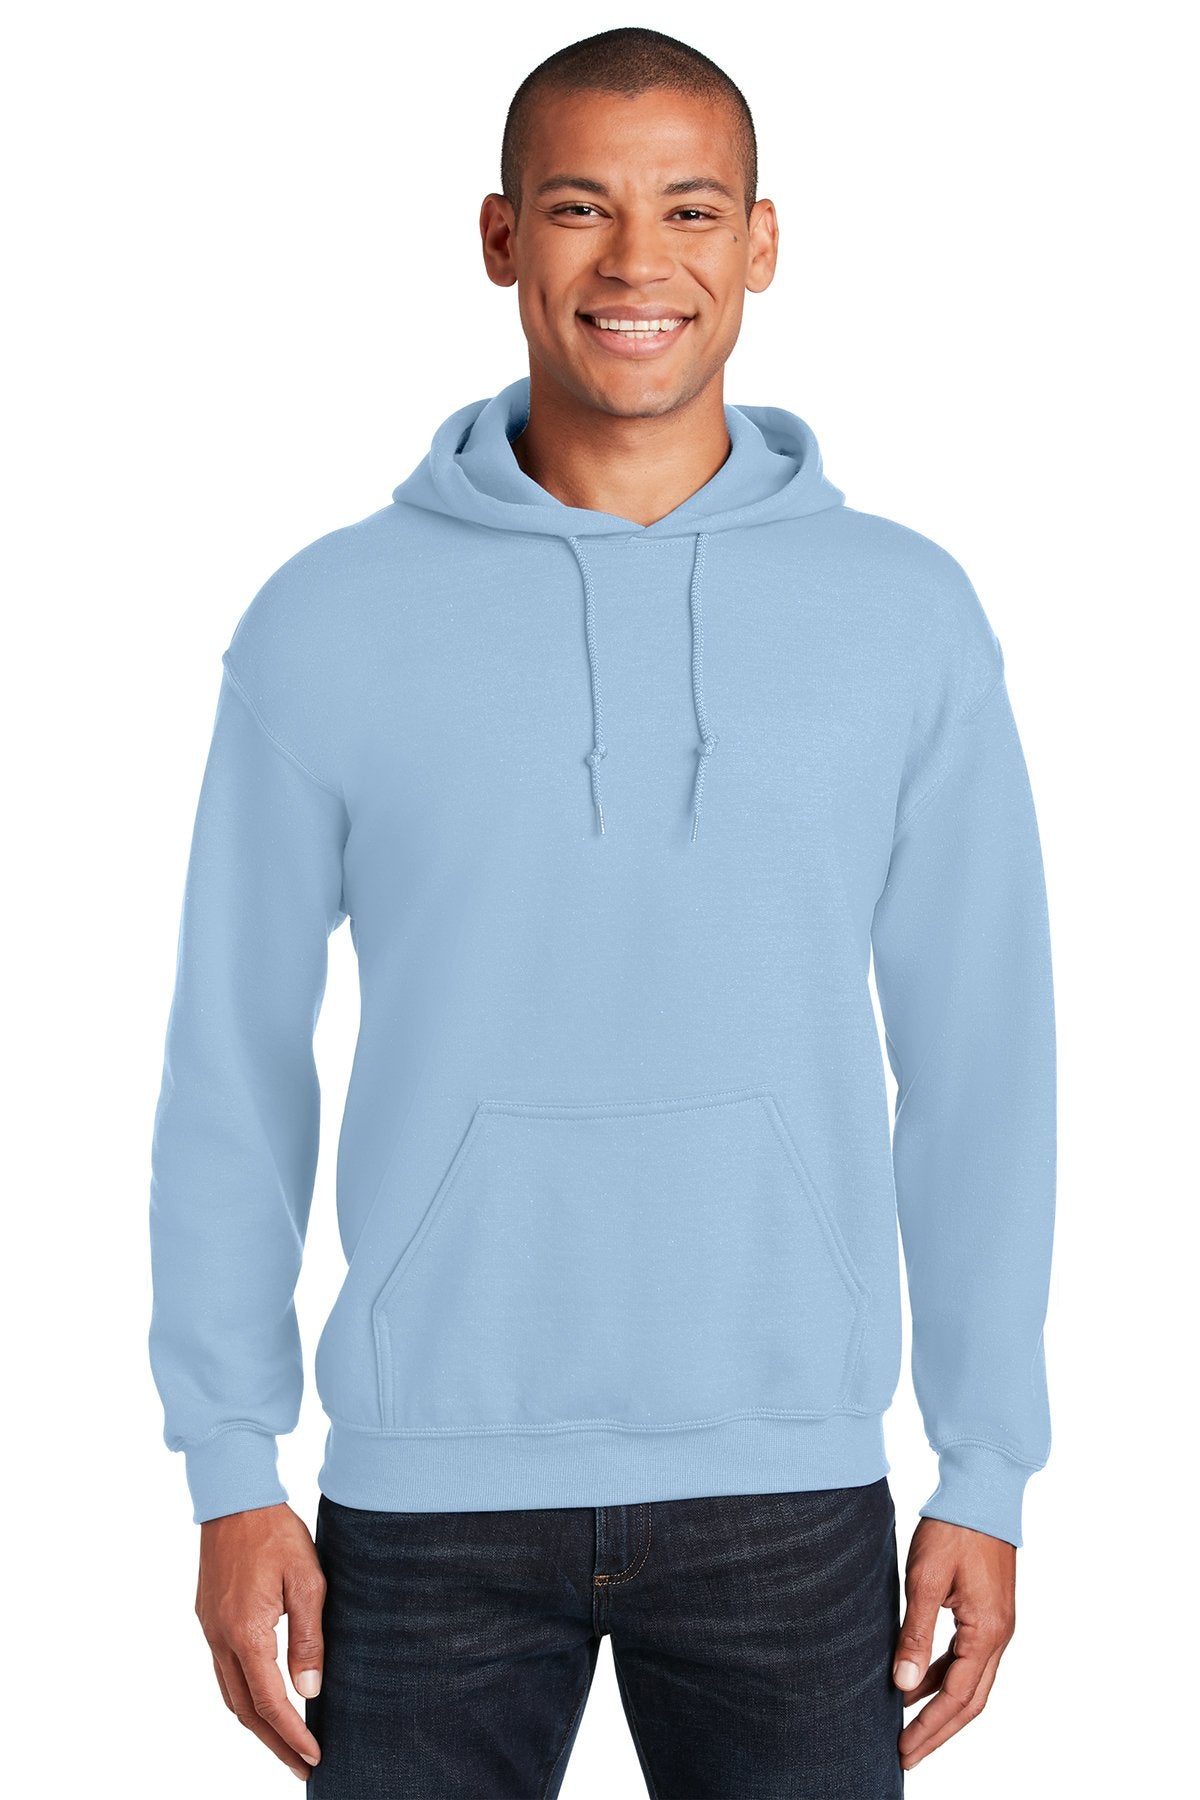 Gildan Light Blue 18500 custom design sweatshirts